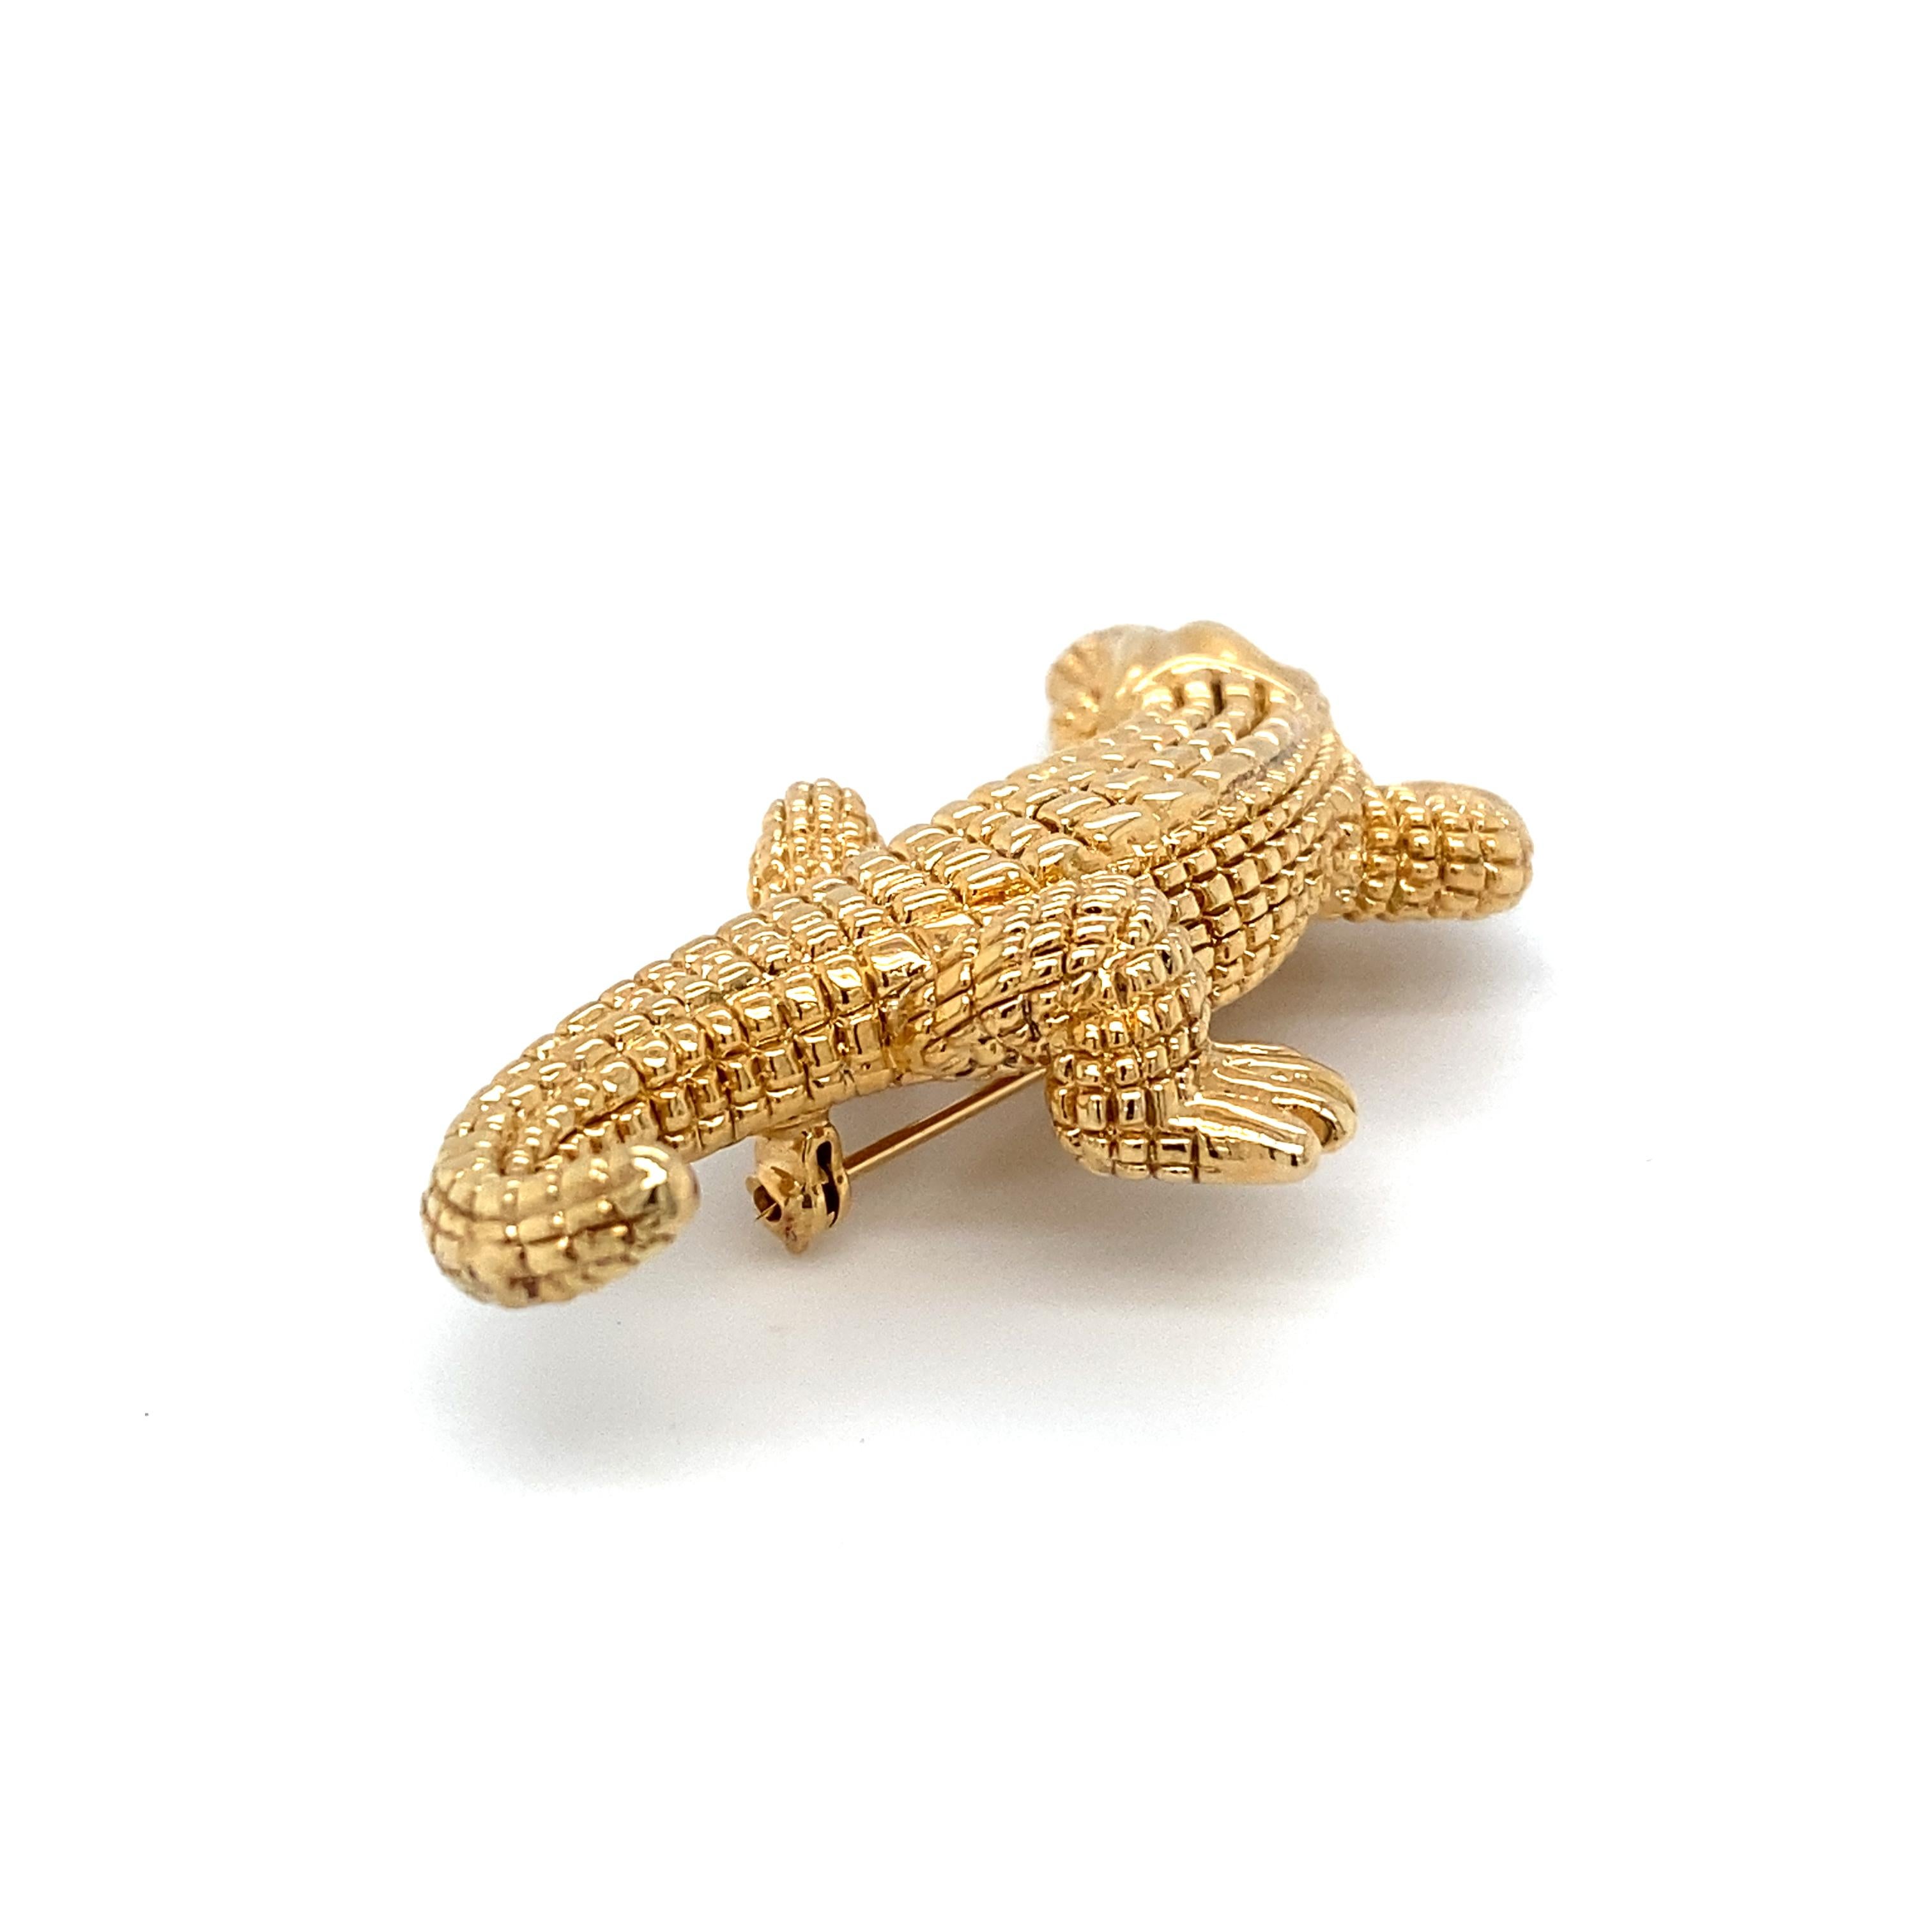 Circa 1960s Alligator Brooch in 14 Karat Gold For Sale 4